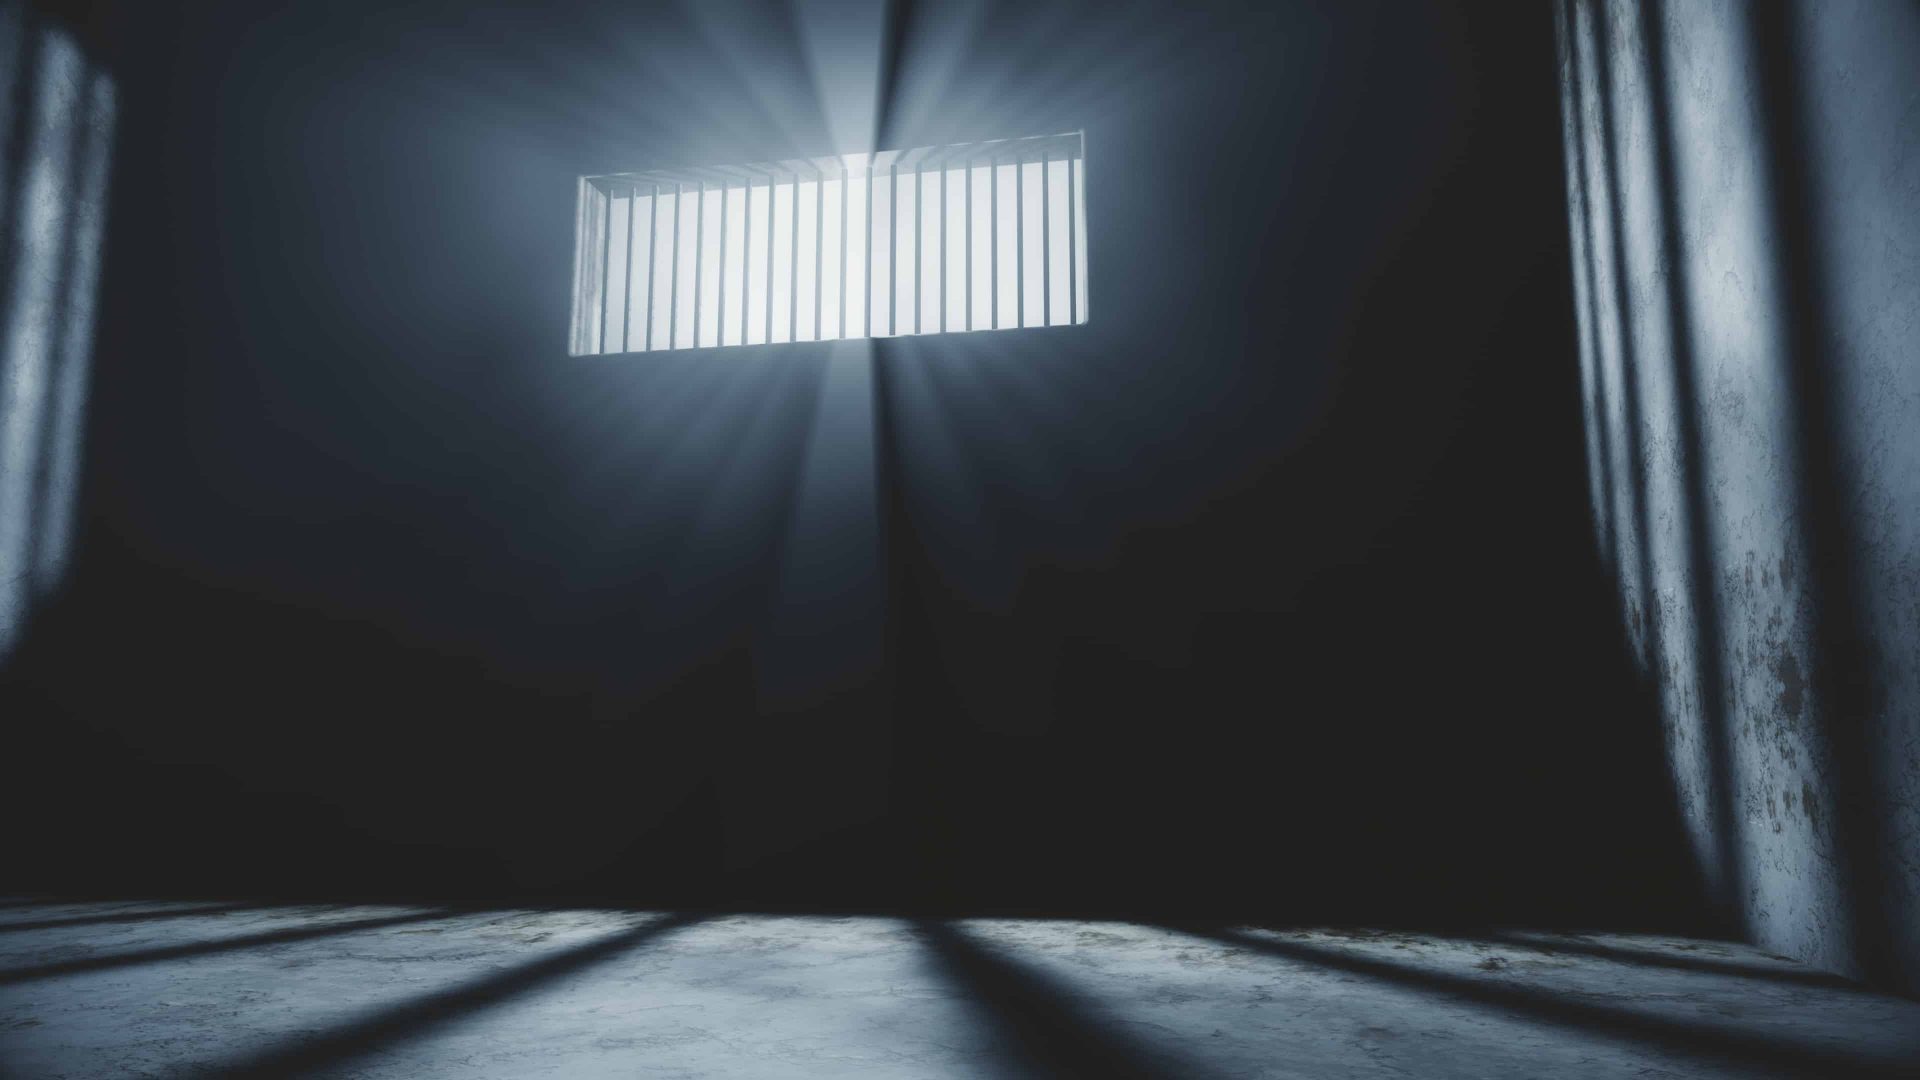 Inside prison cell